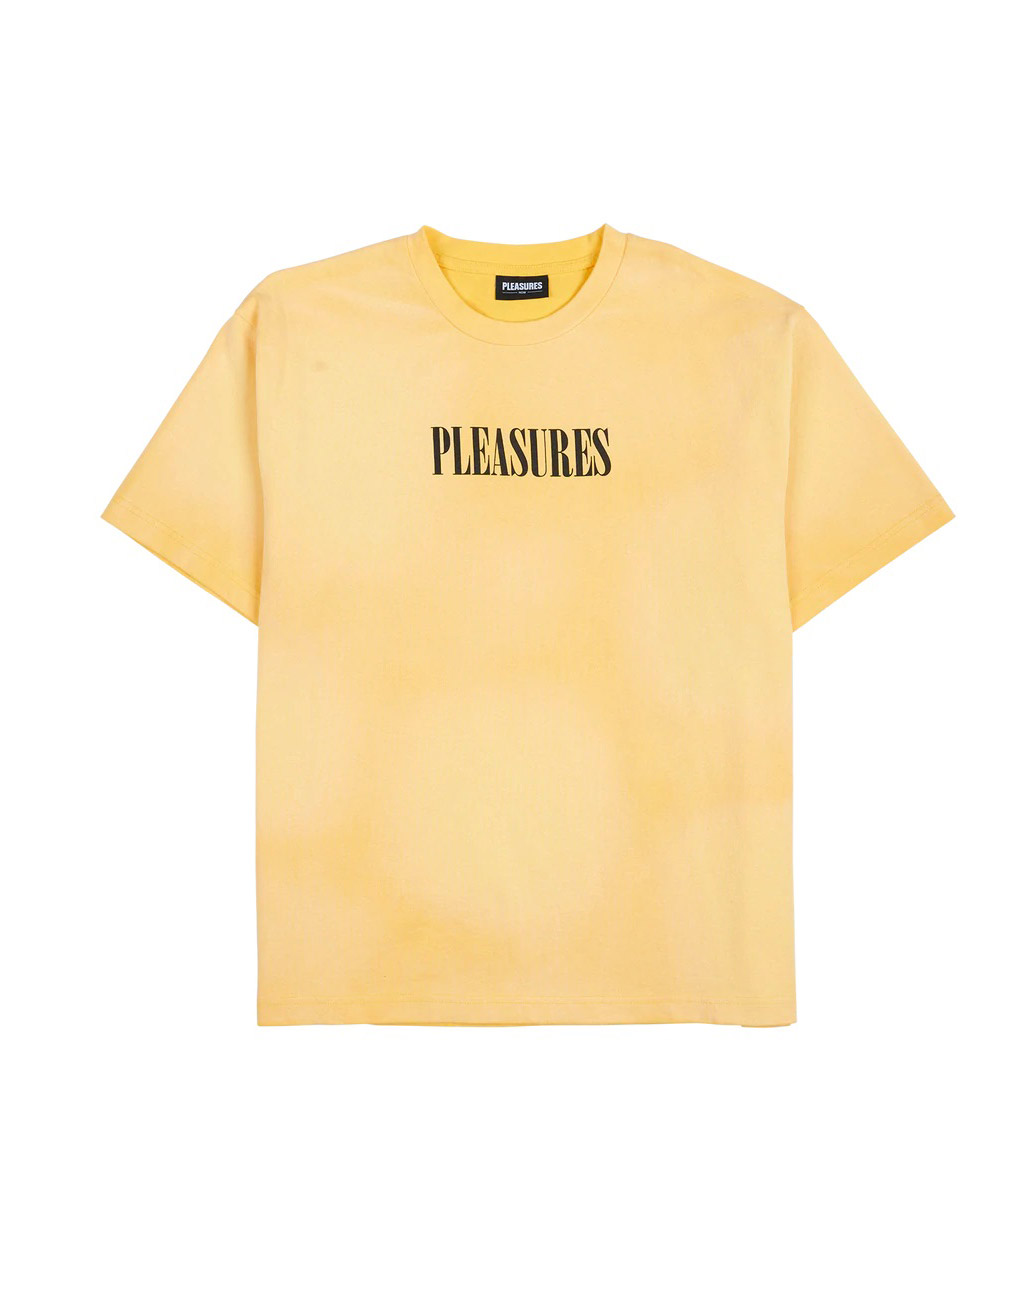 PLEASURES – Special heavyweight shirt